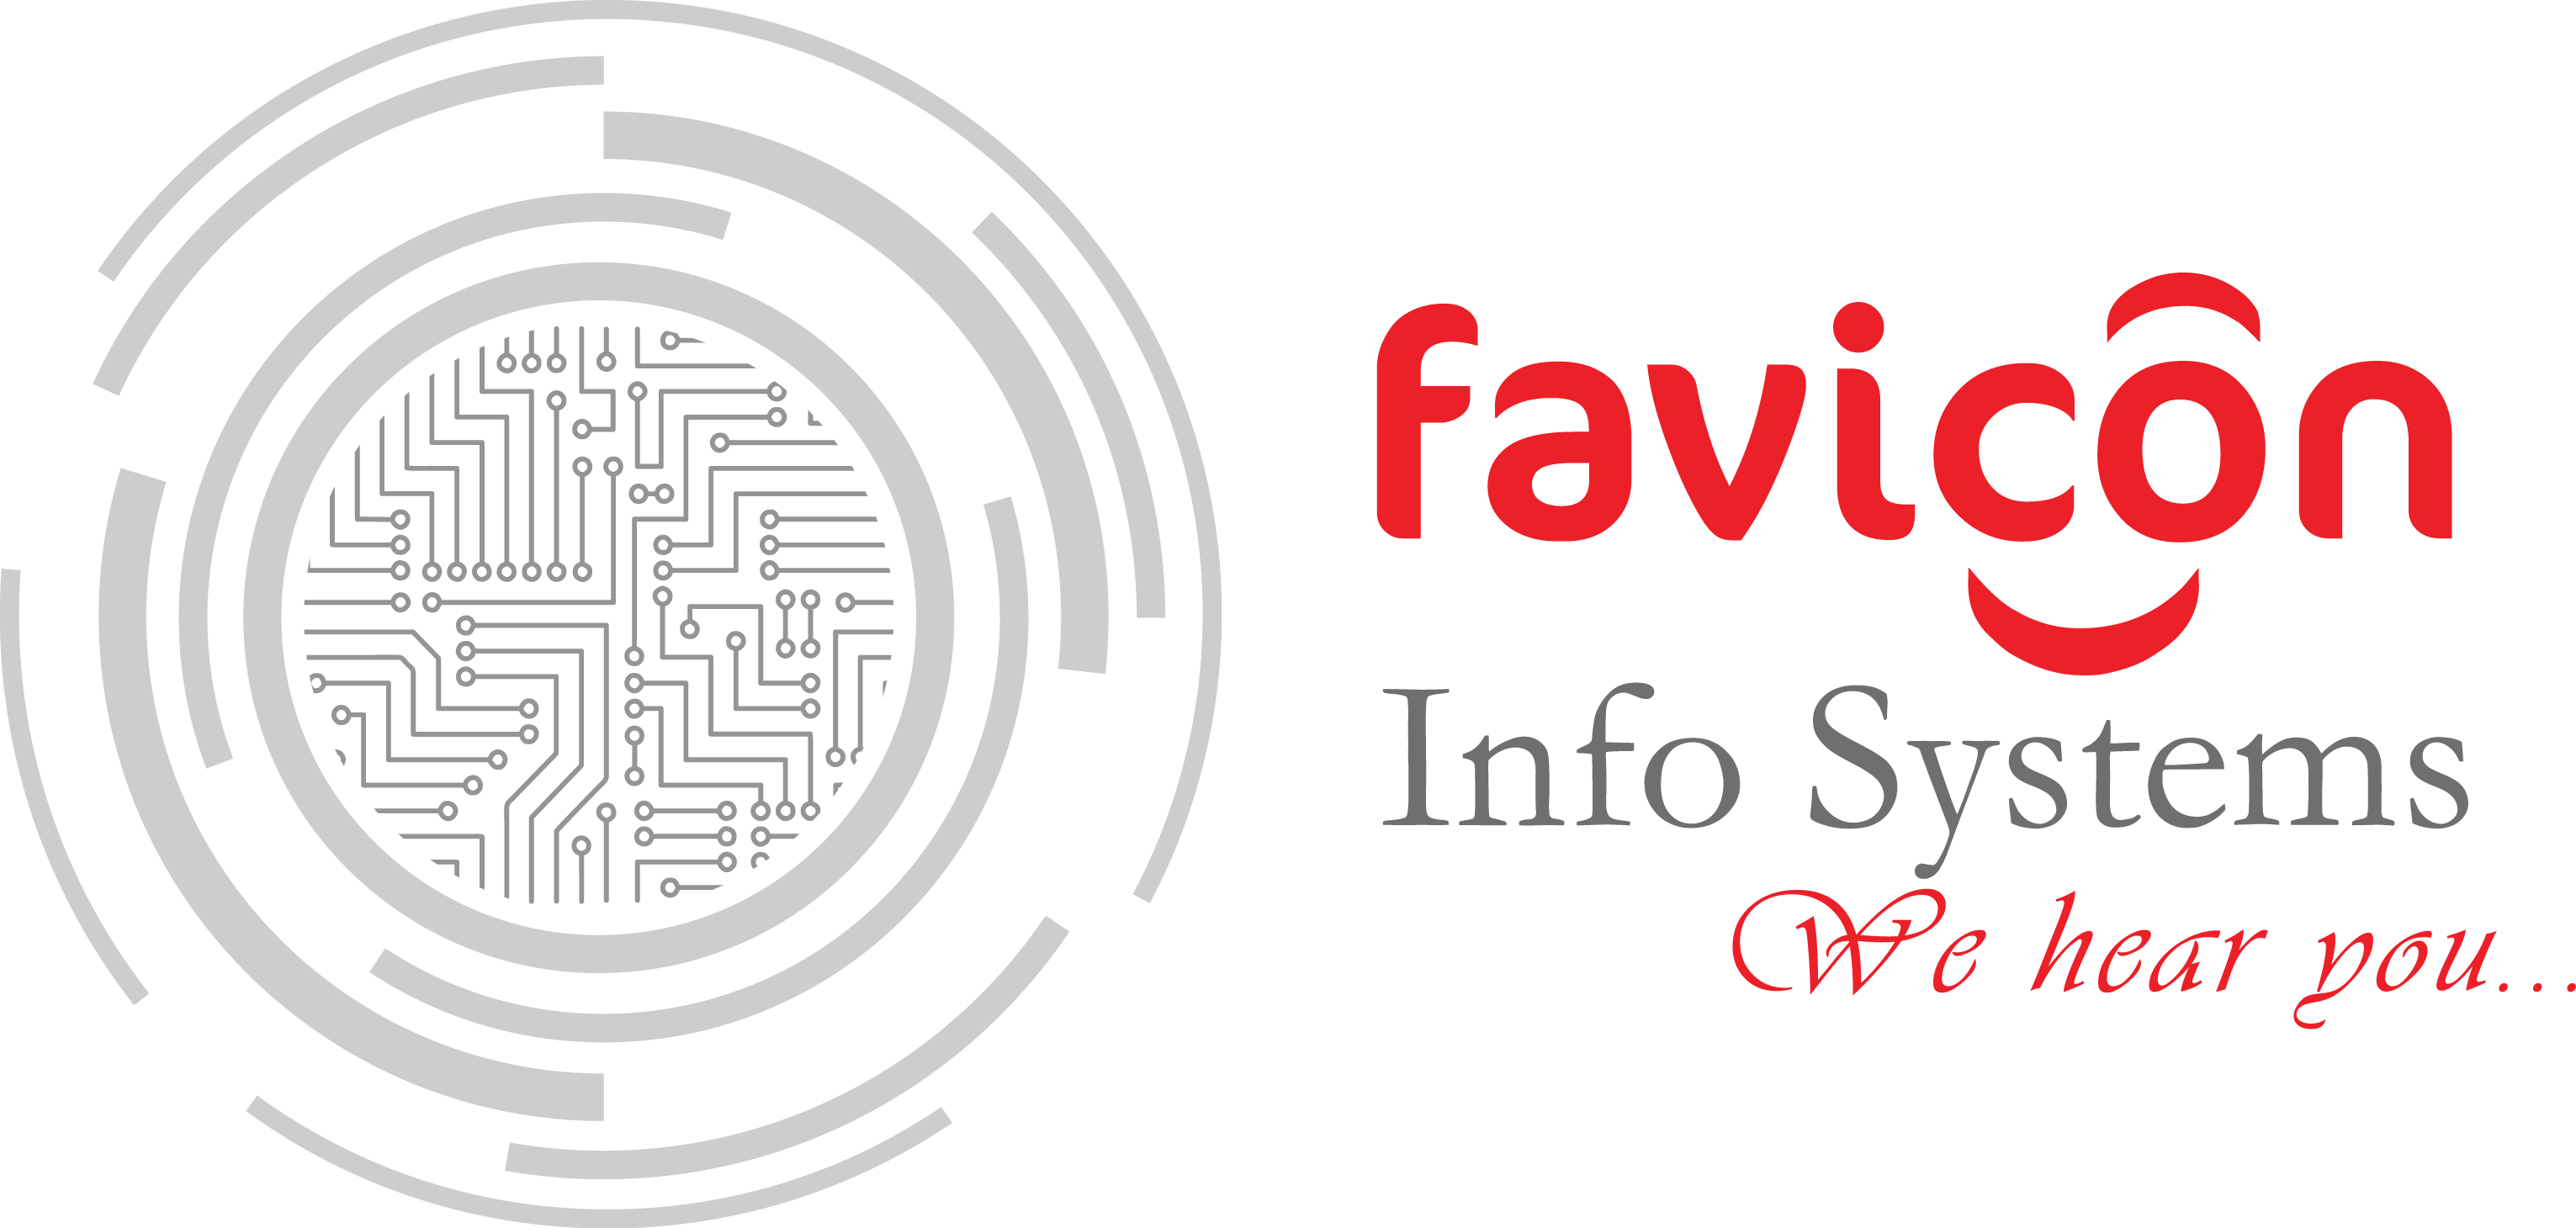 Favicon logo